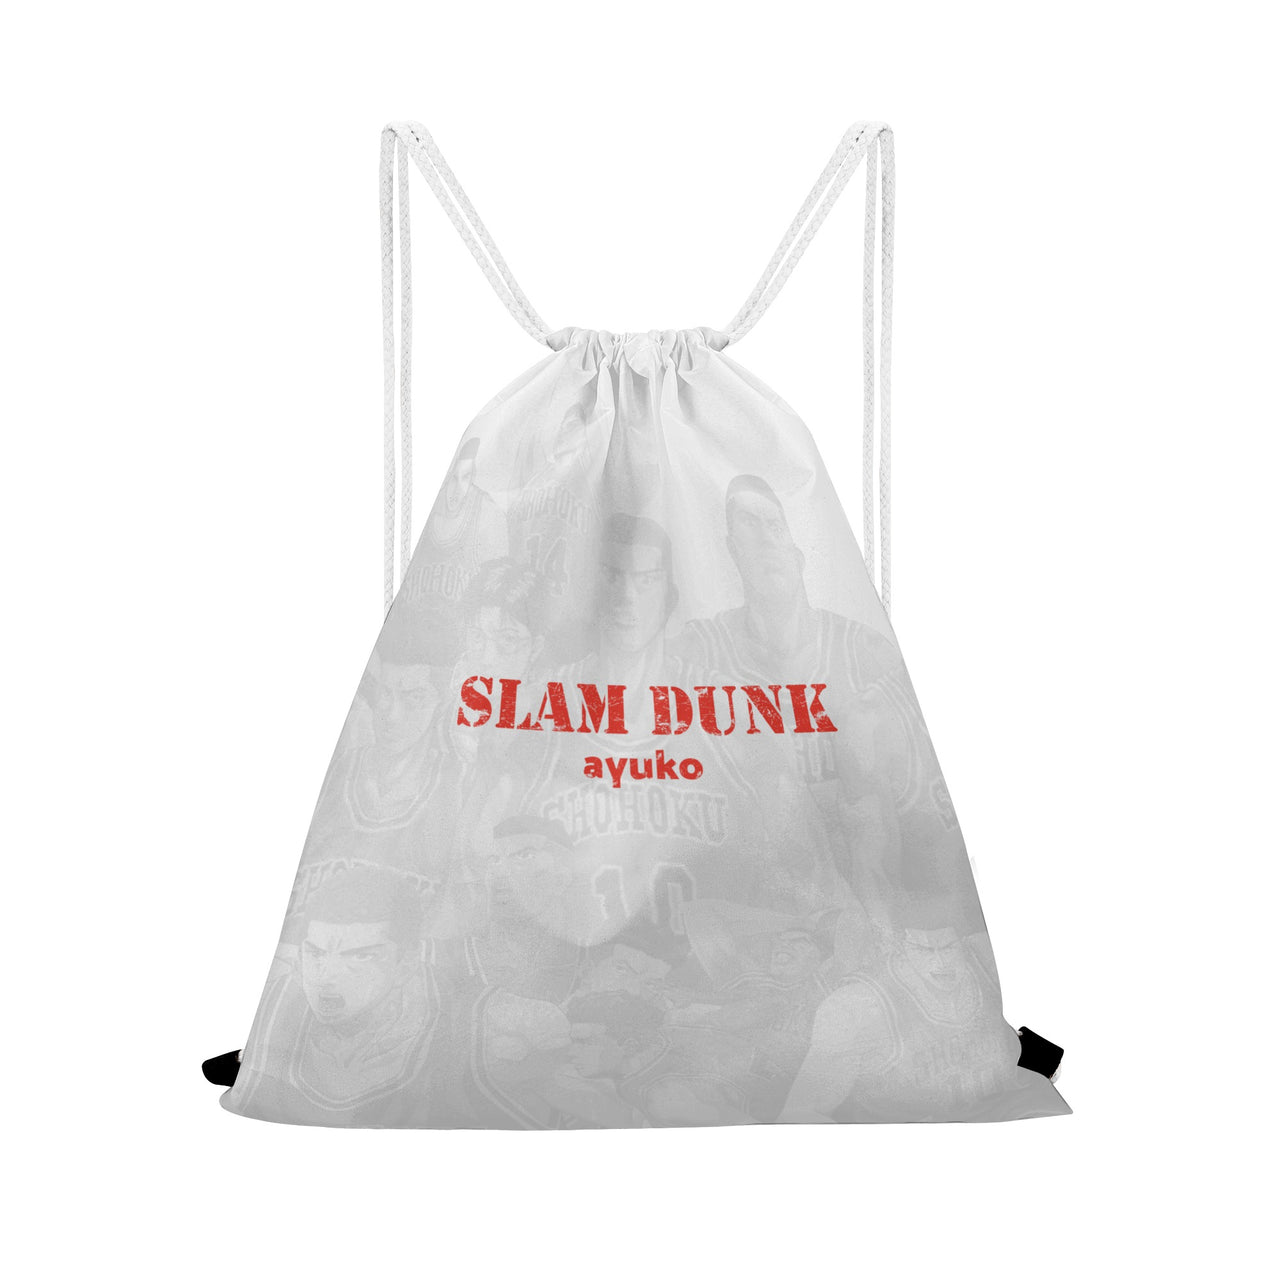 Slam Dunk Anime Drawstring Bag